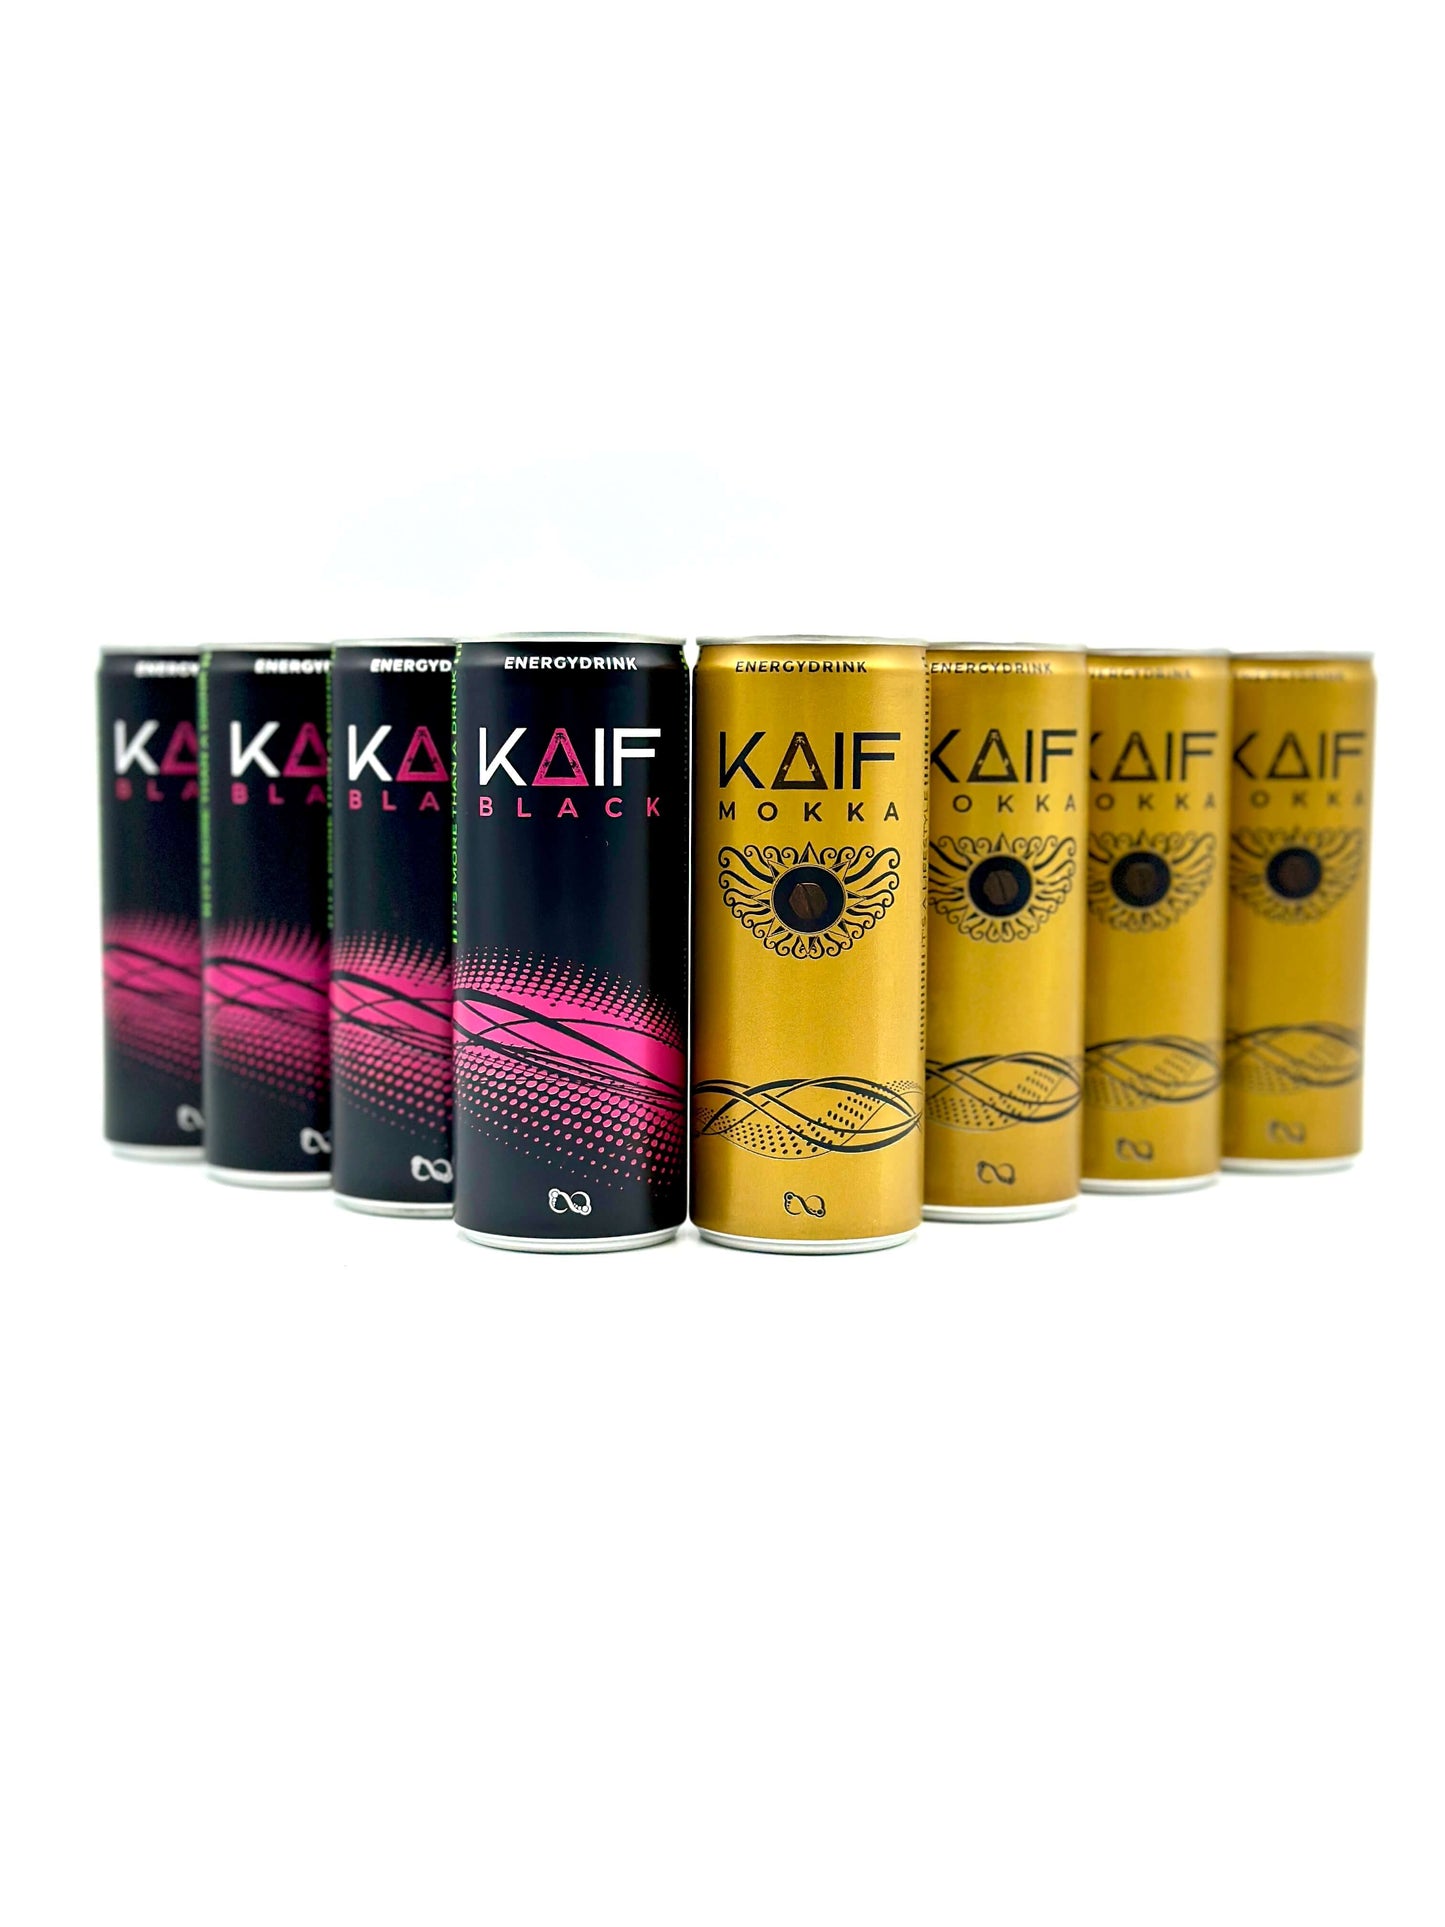 KAIF Energy Genusspaket | inkl. Pfand